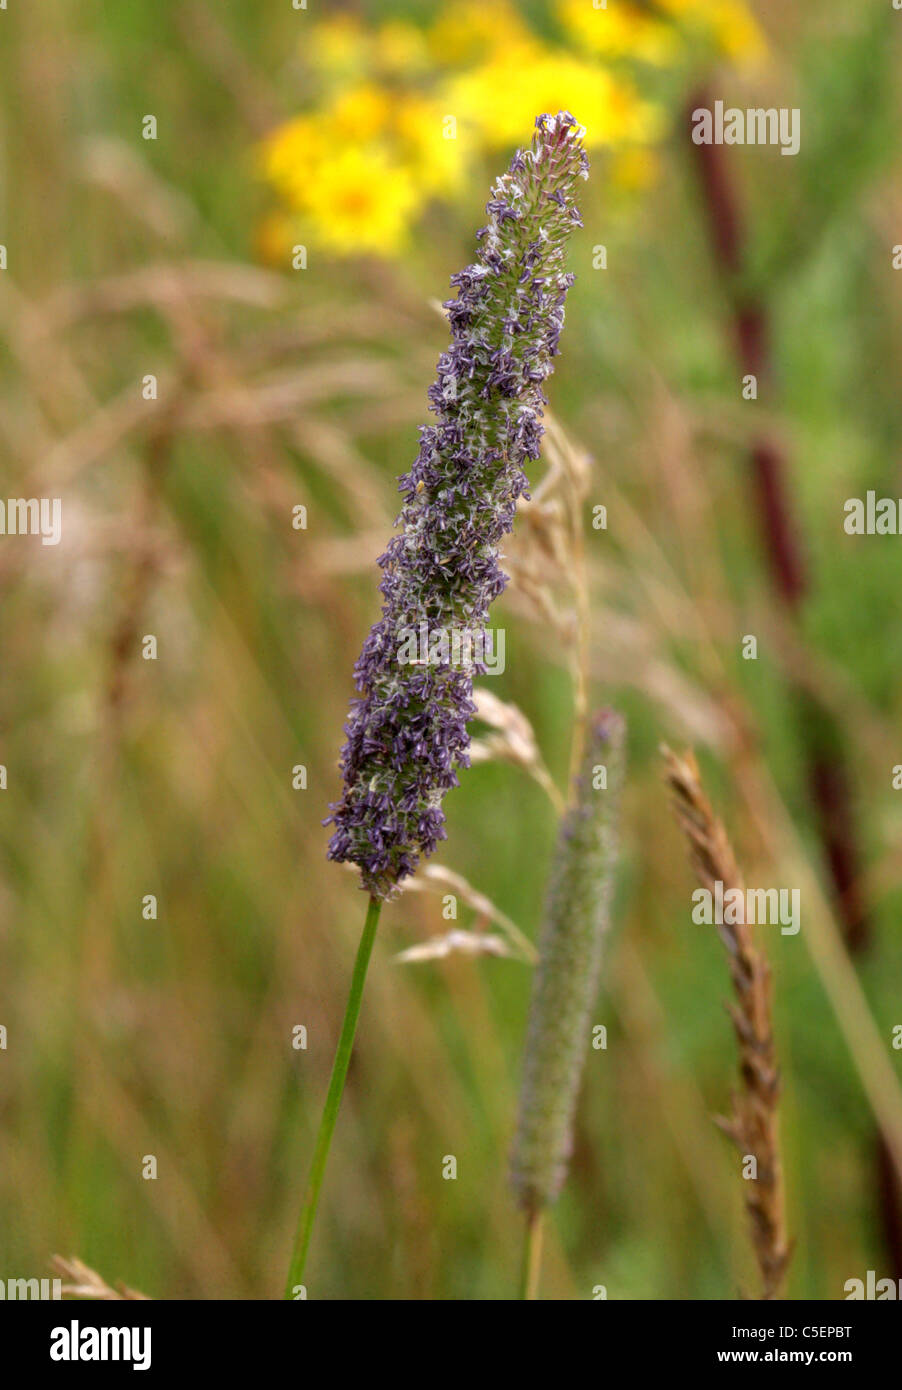 Timothy or Cat's-tail Grass, Phleum pratense, Aveneae, Pooideae, Poaceae. Syn. Alopecurus songaricus, Alopecurus alpinus. Stock Photo